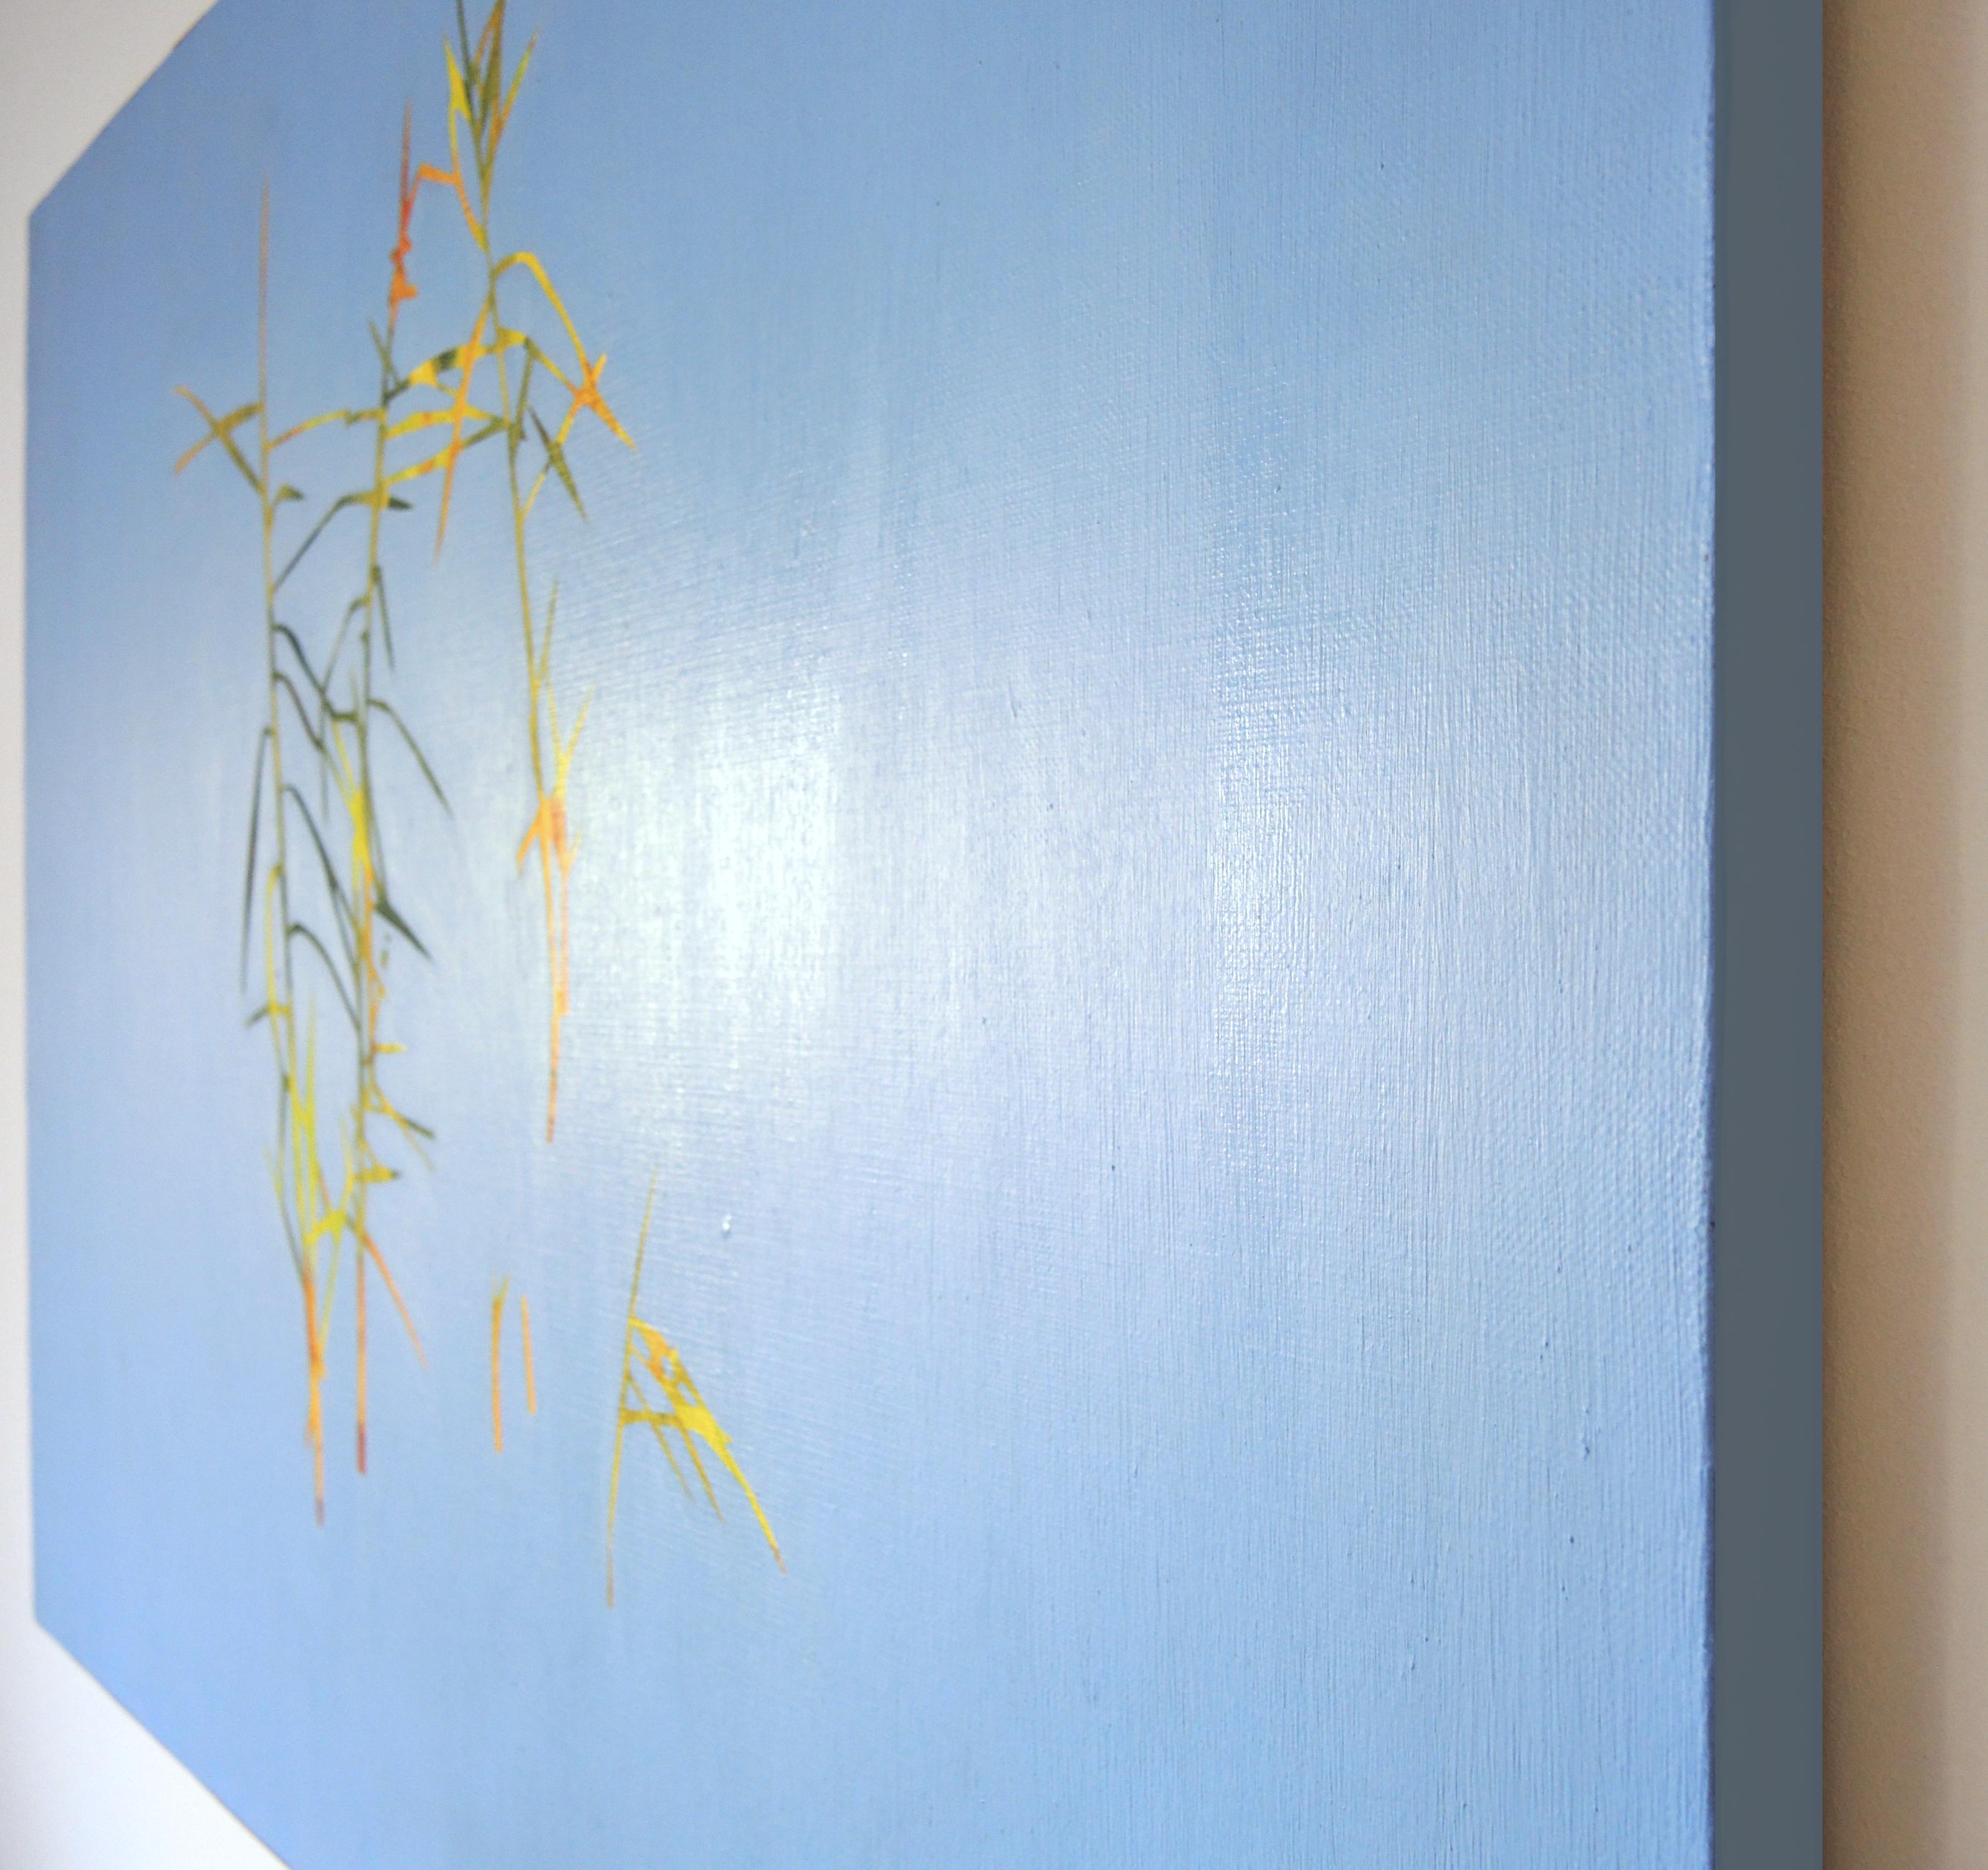 Reeds 28 September 13:42, Modern Landscape Oil Painting, Nature Lake, Minimalism 2